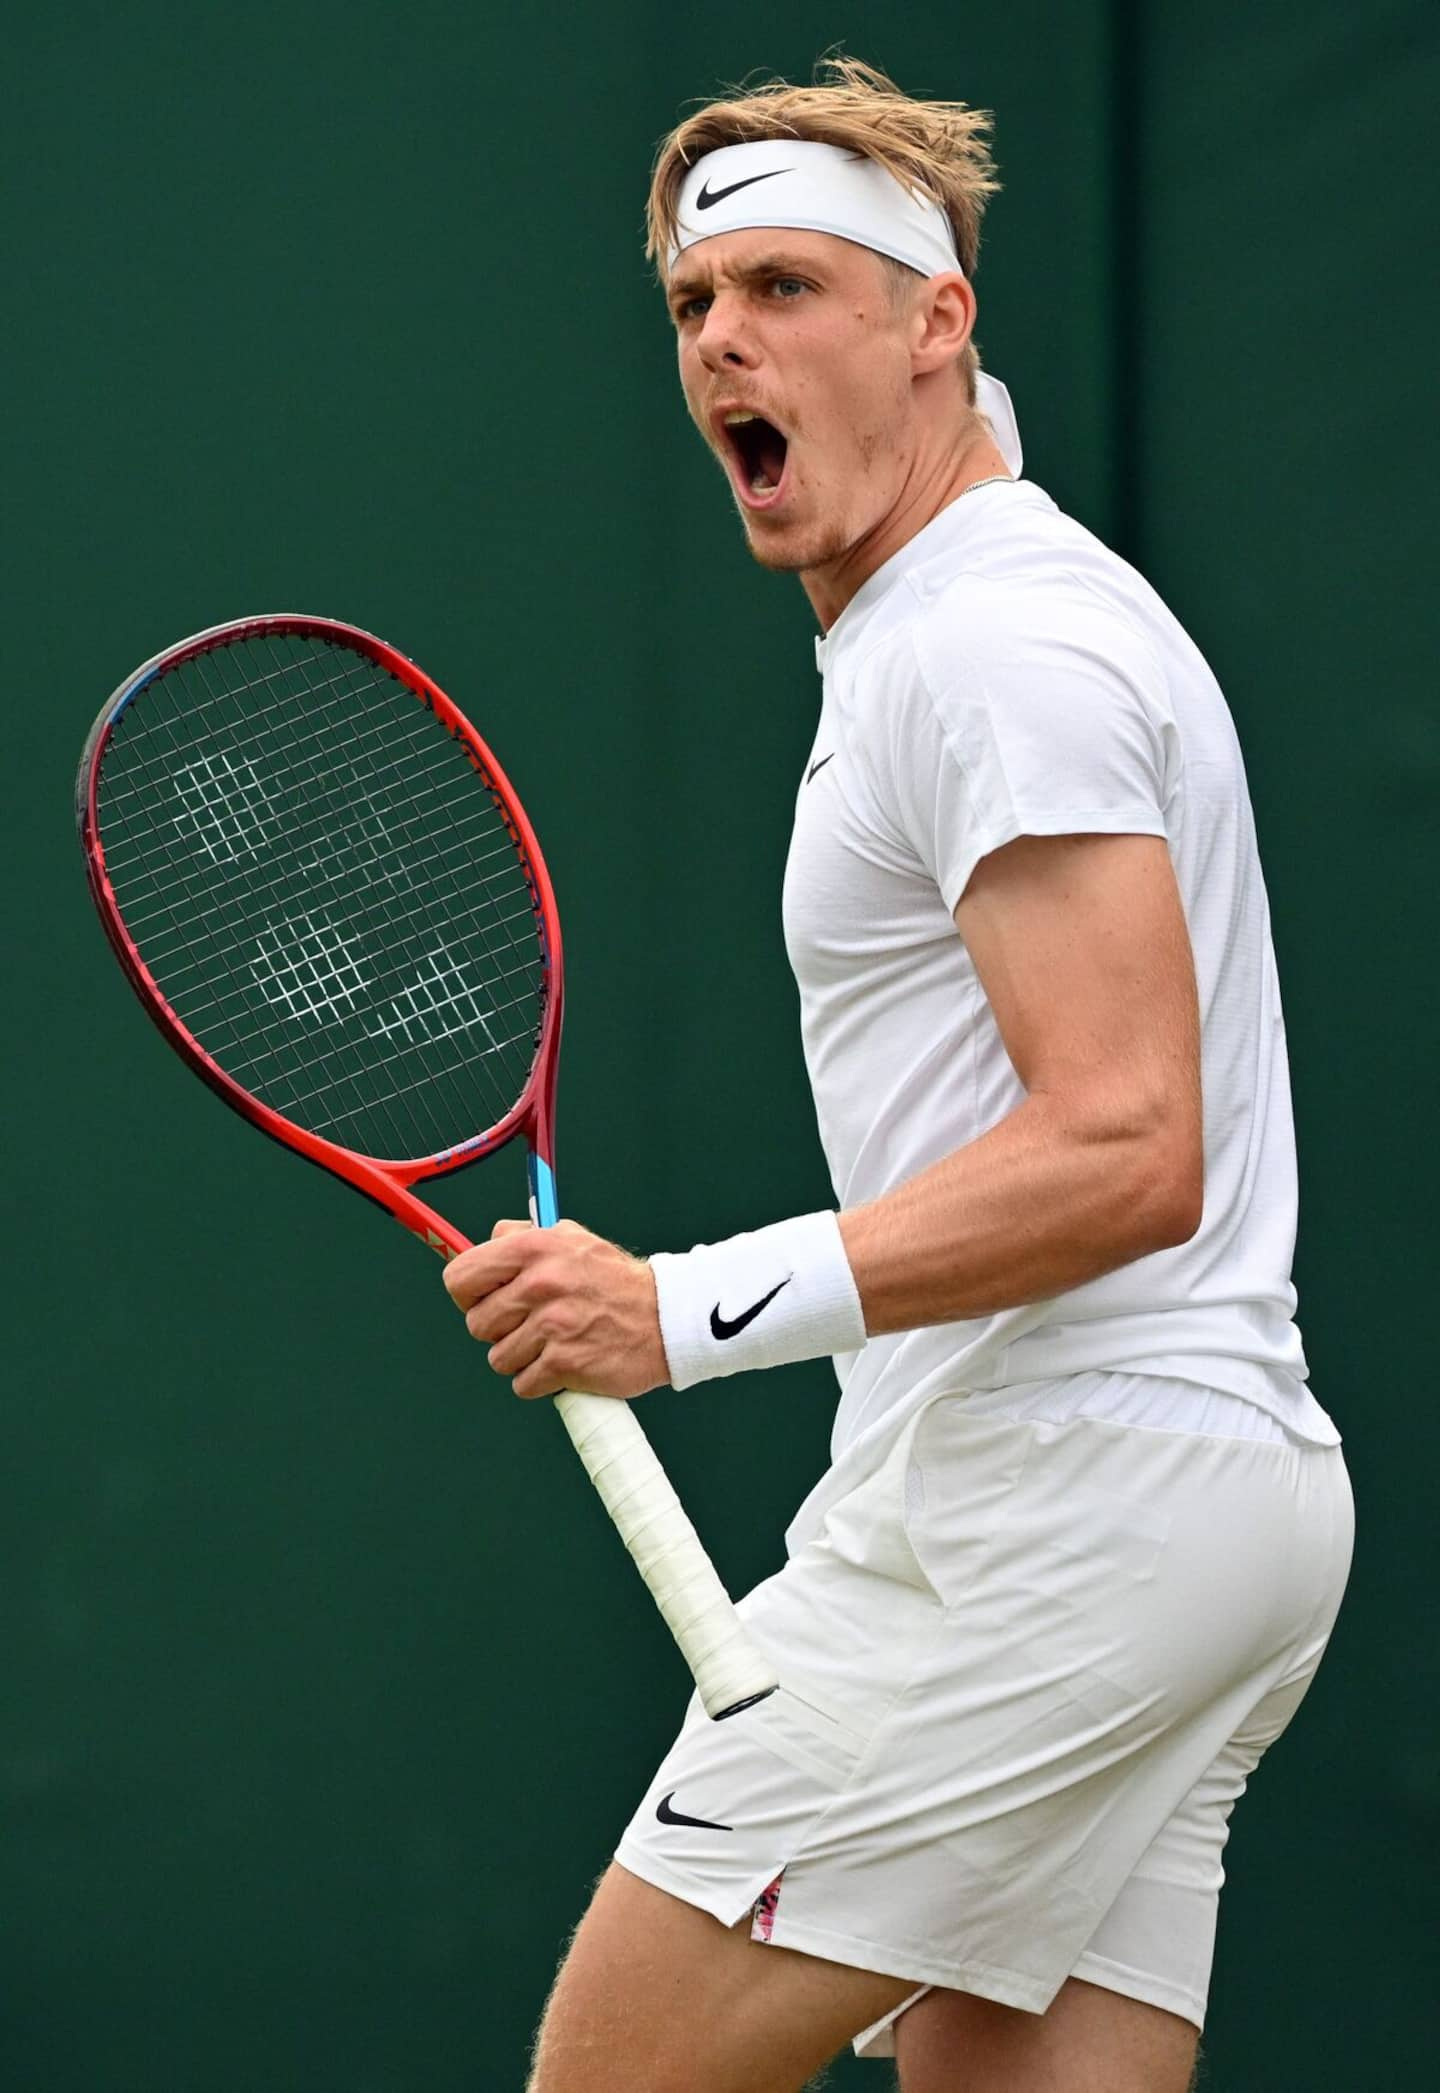 Denis Shapovalov wins a marathon in his first match at Wimbledon